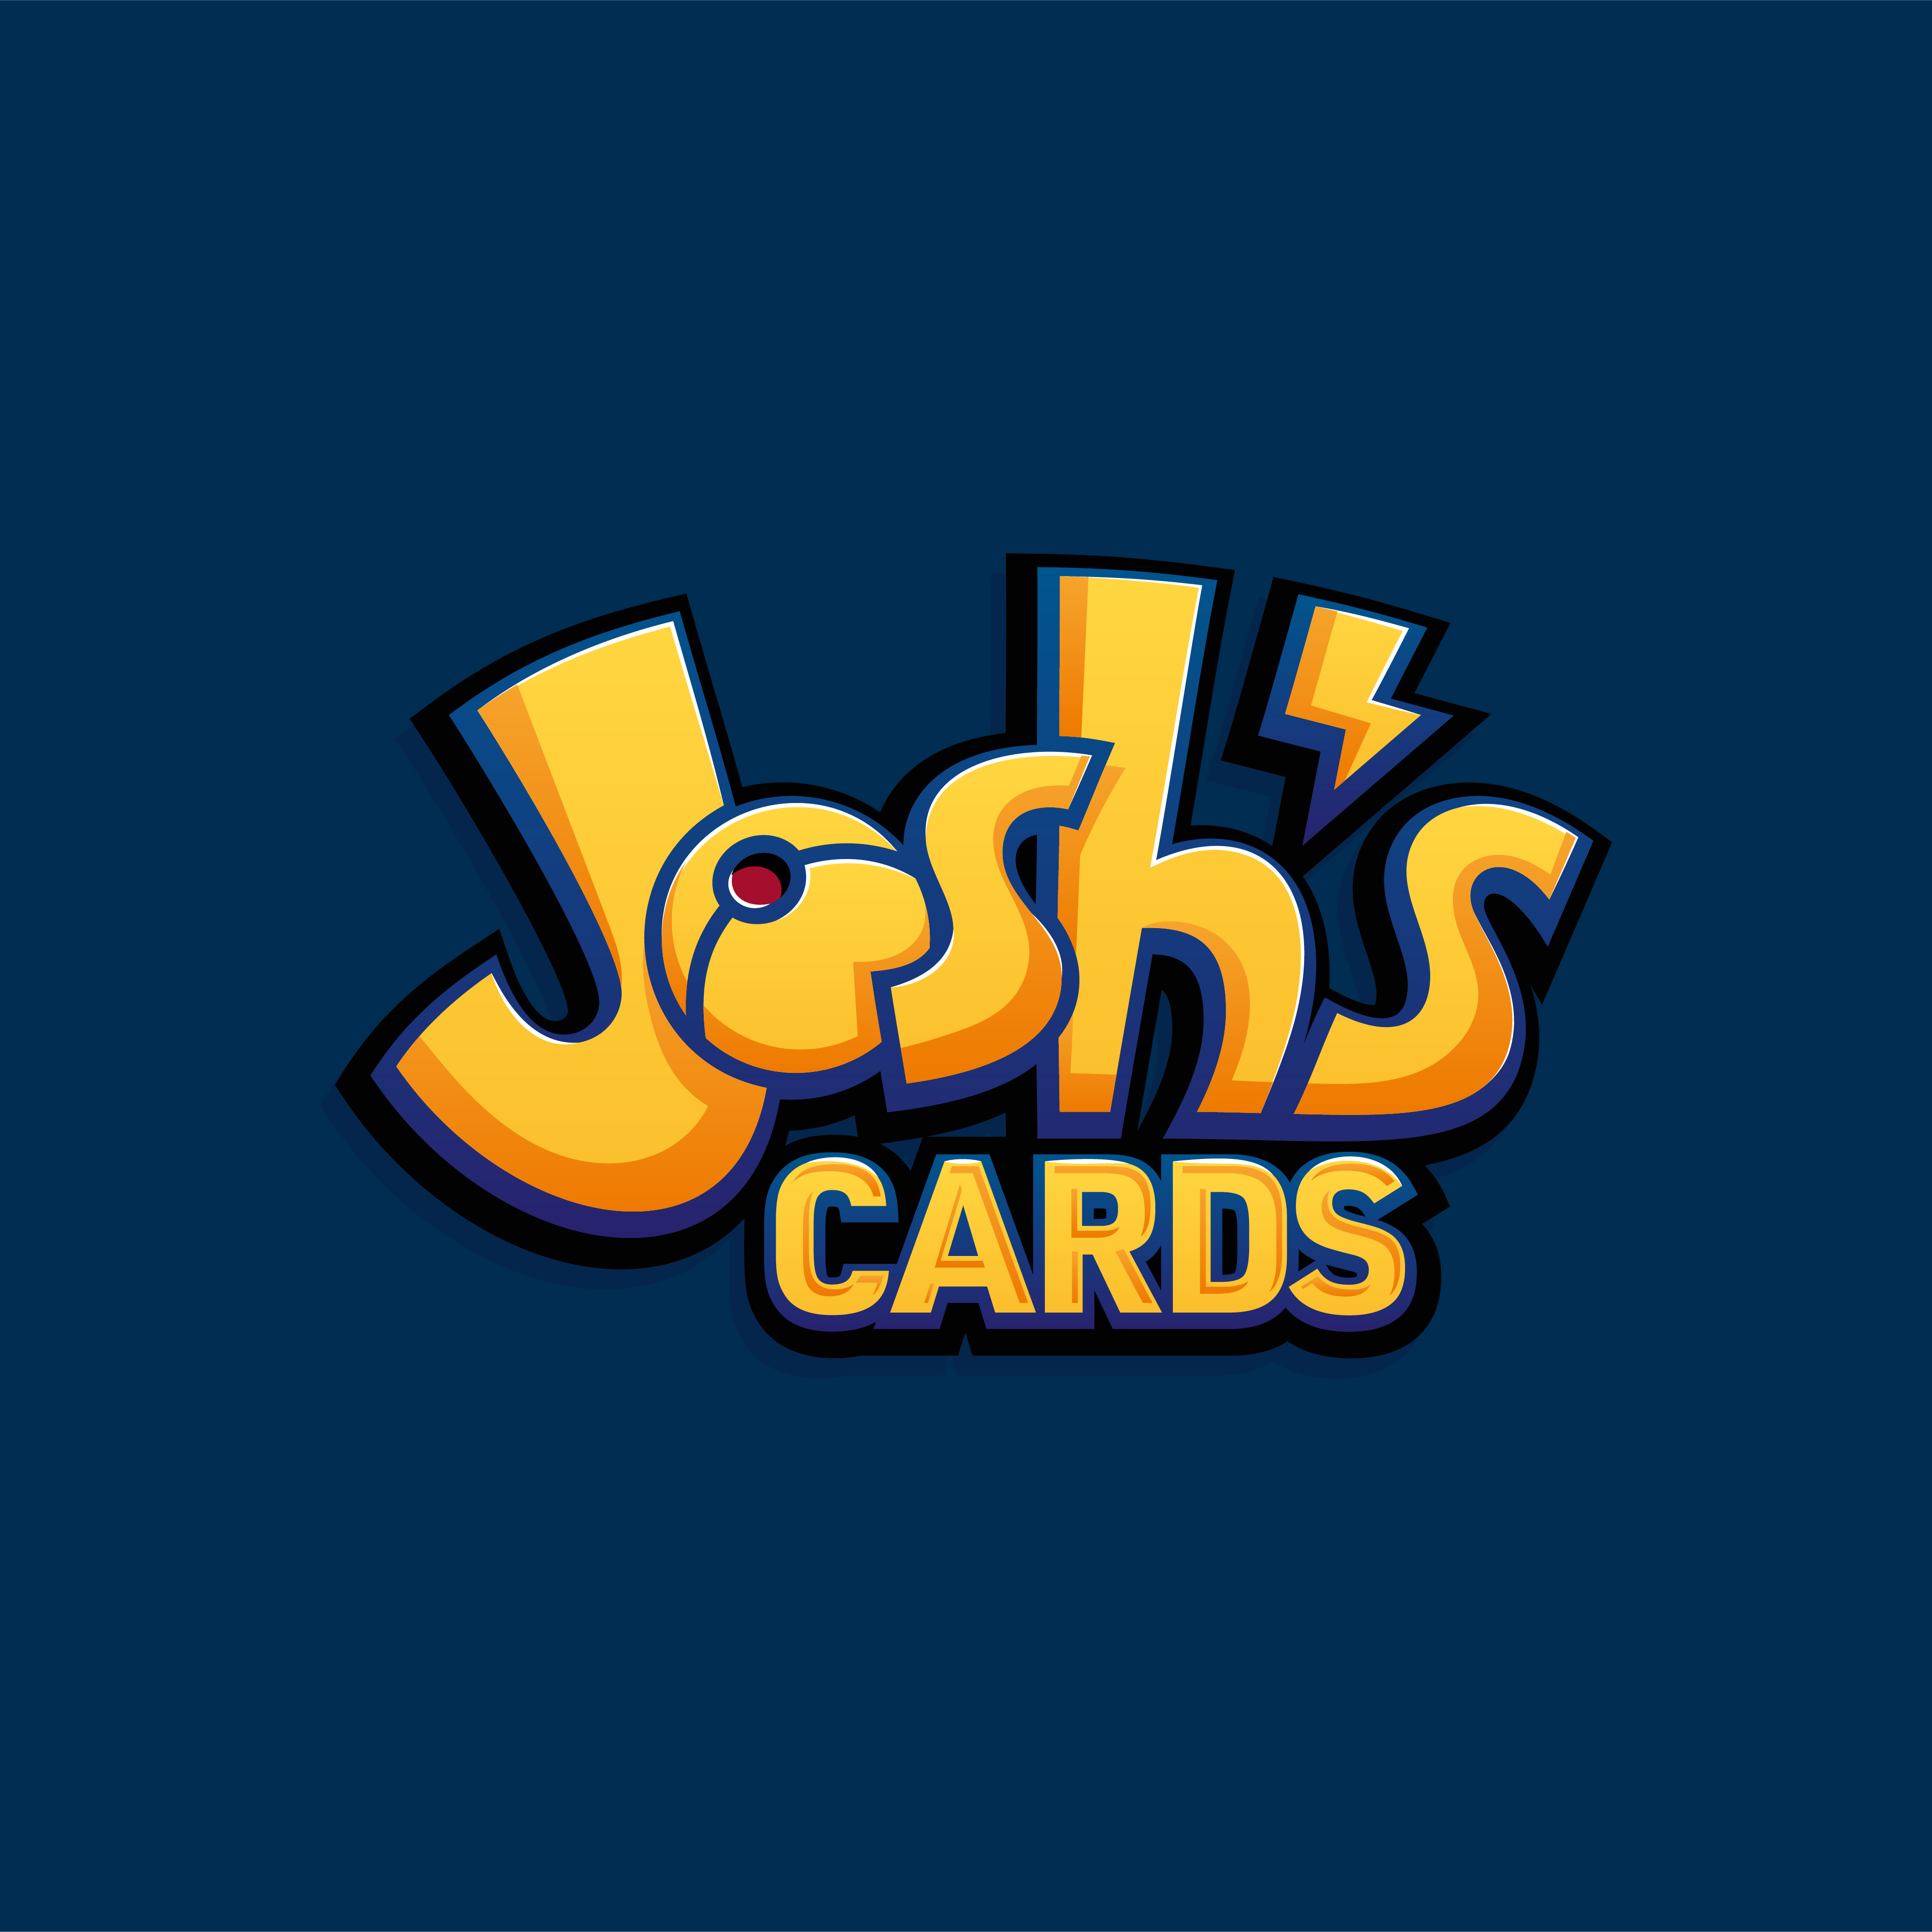 Josh的卡片